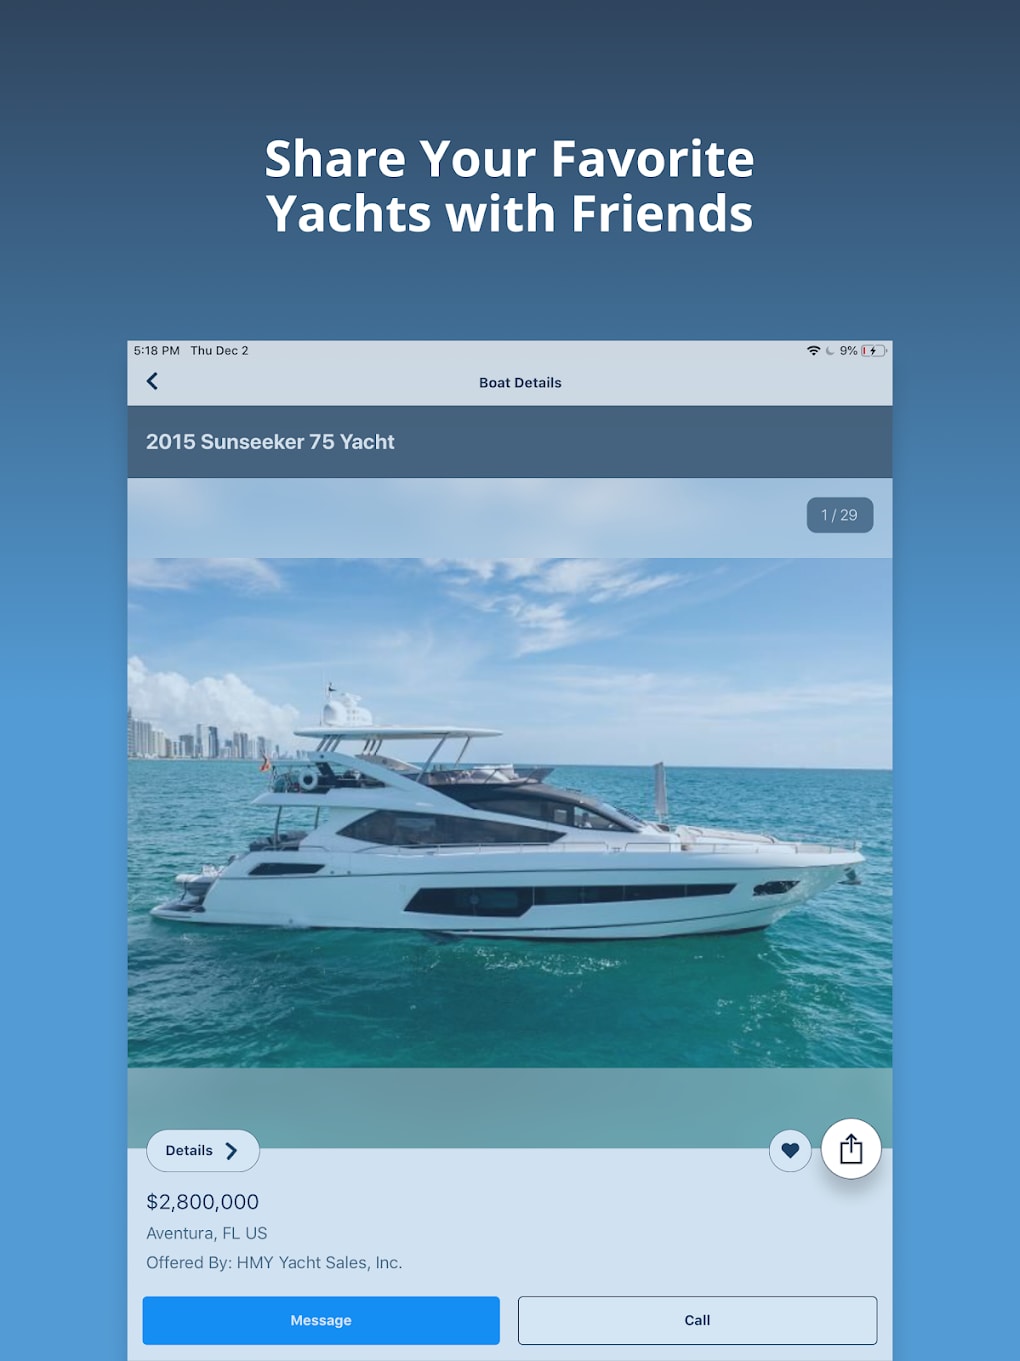 yacht world app